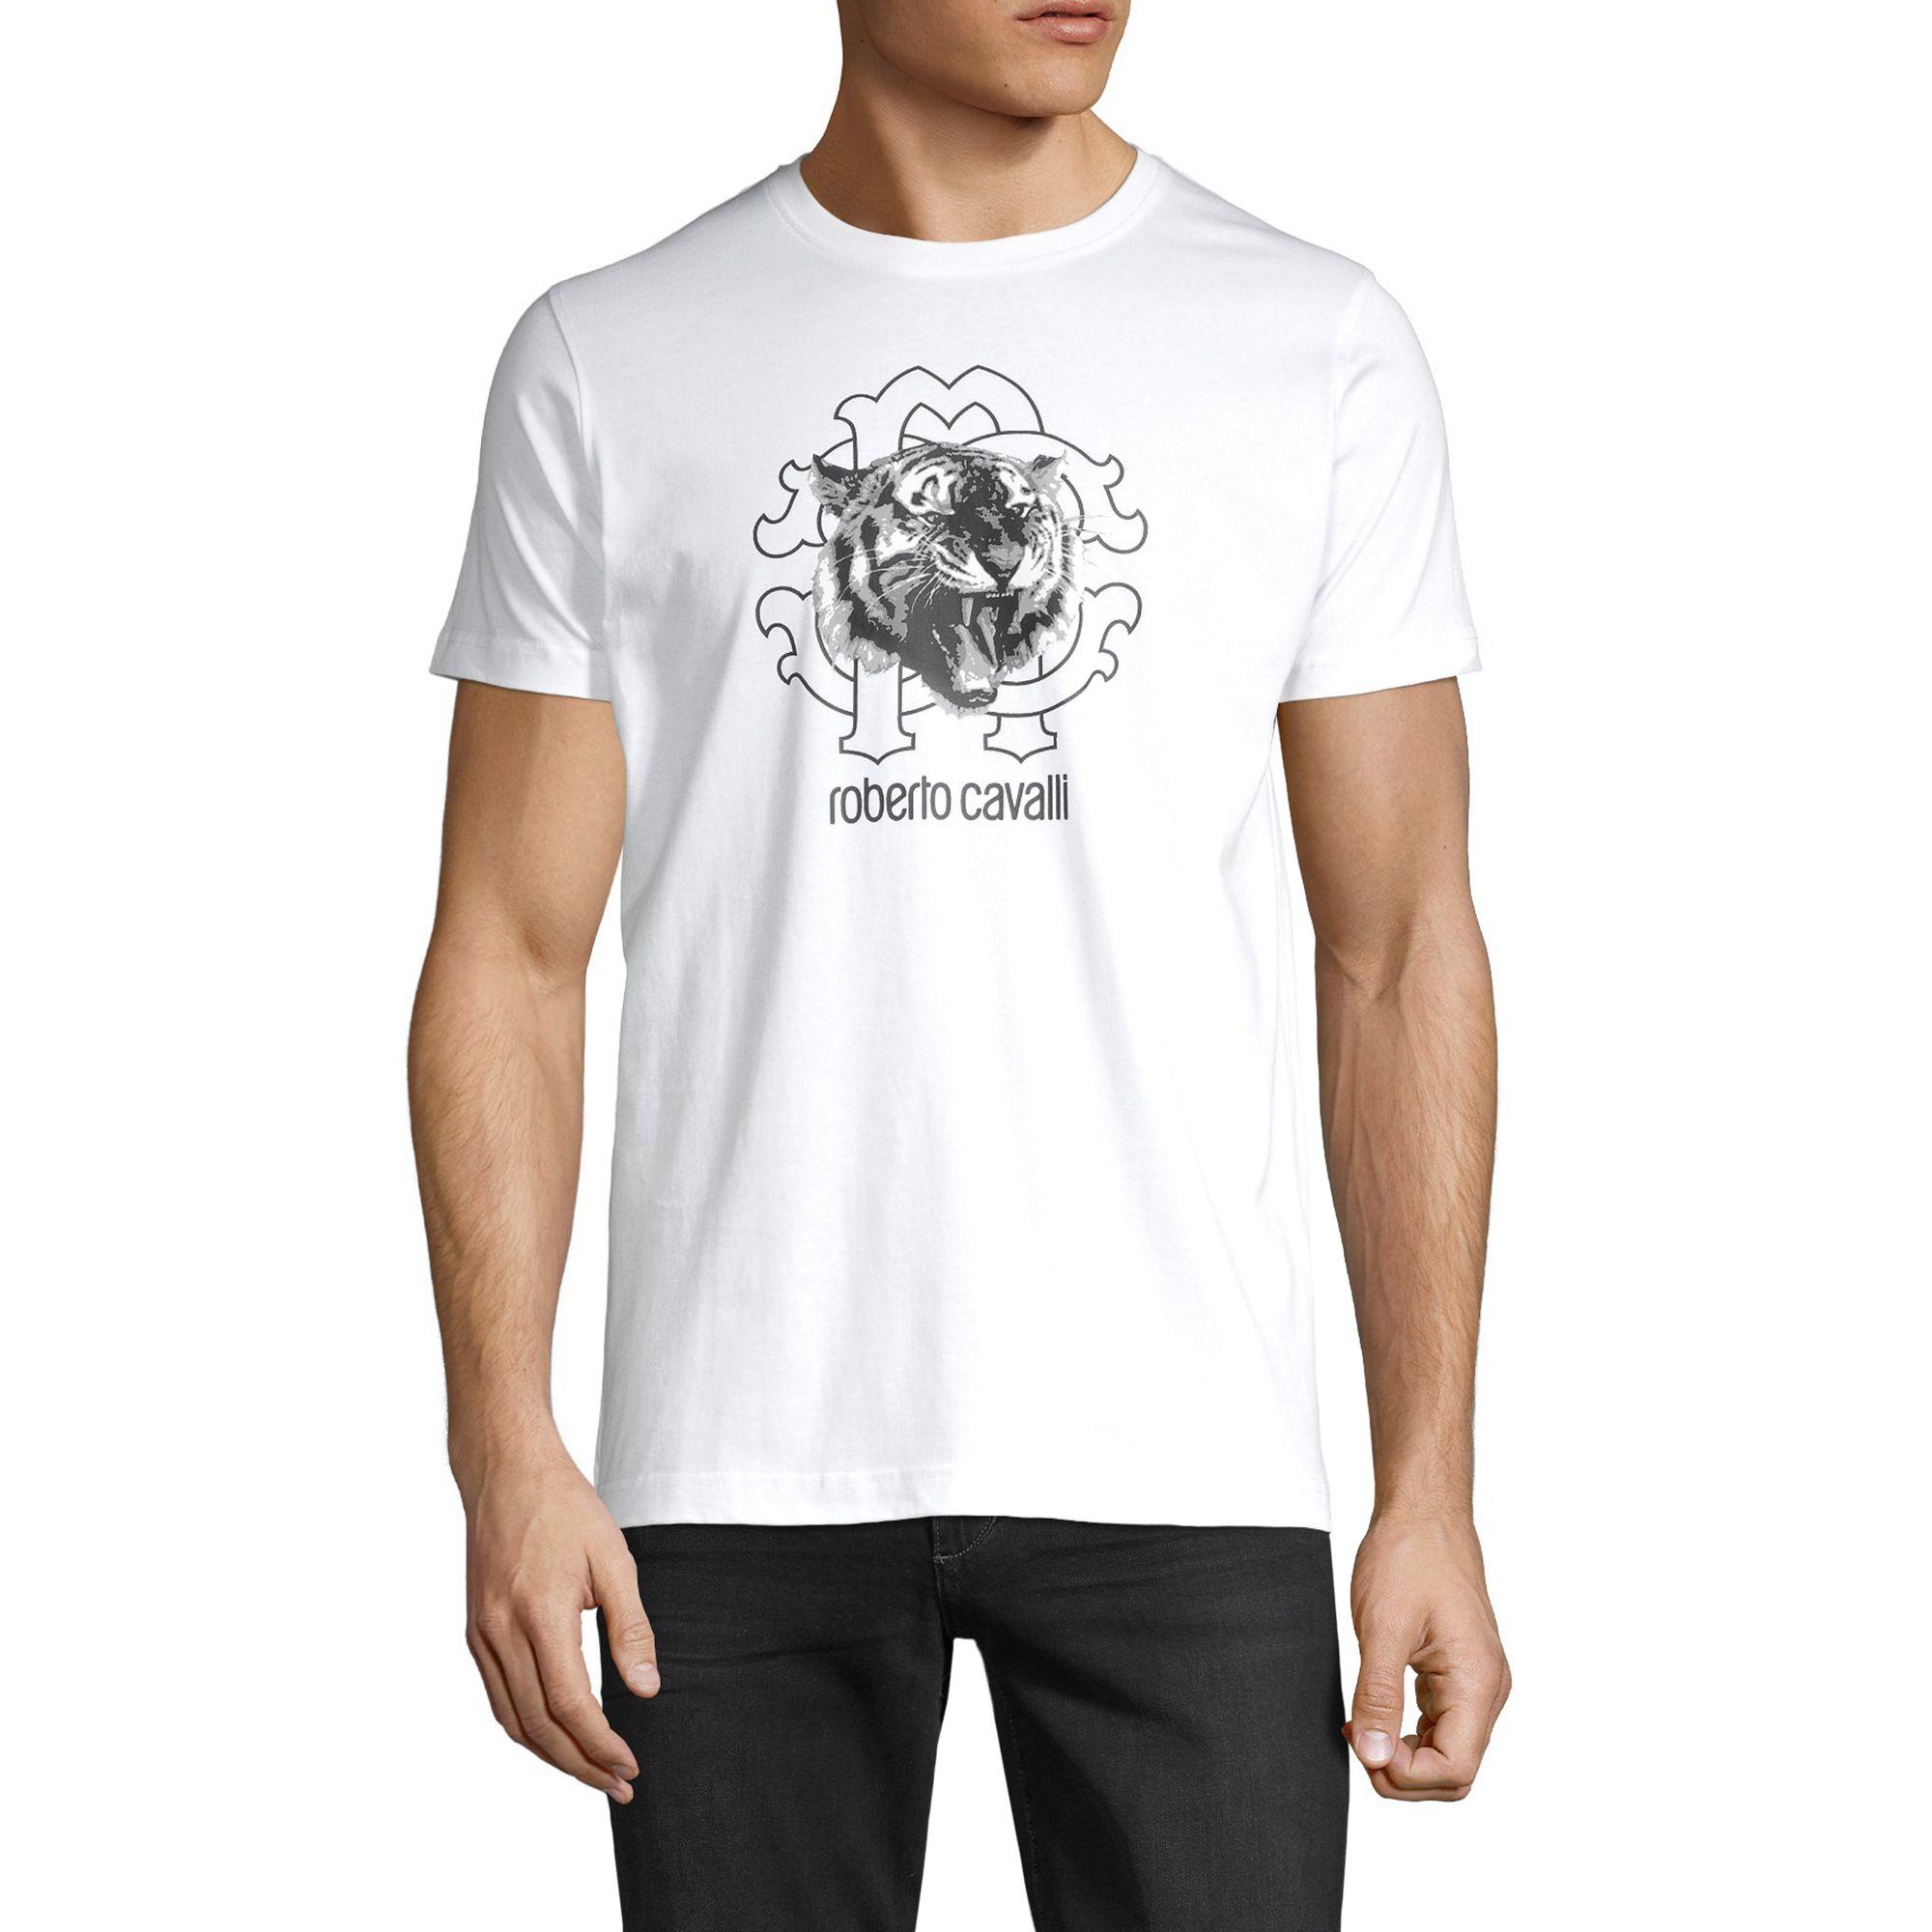 Roberto Cavalli Cotton Tiger Logo T-shirt in White for Men - Lyst